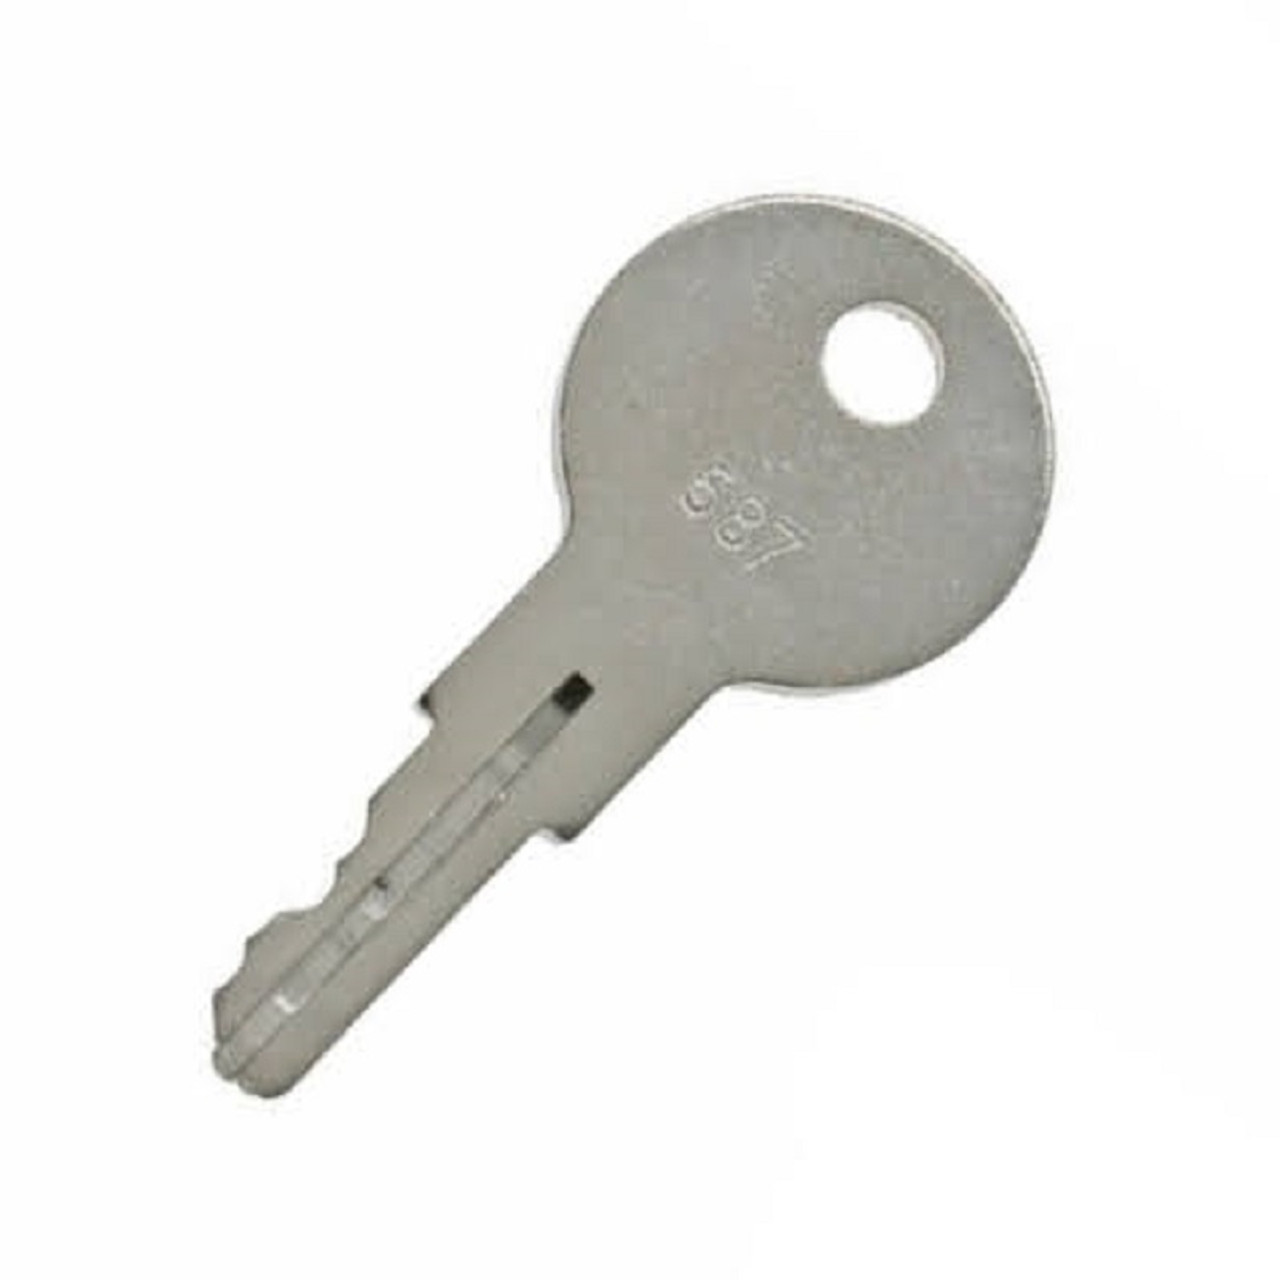 JLG Ignition Key 7012587 